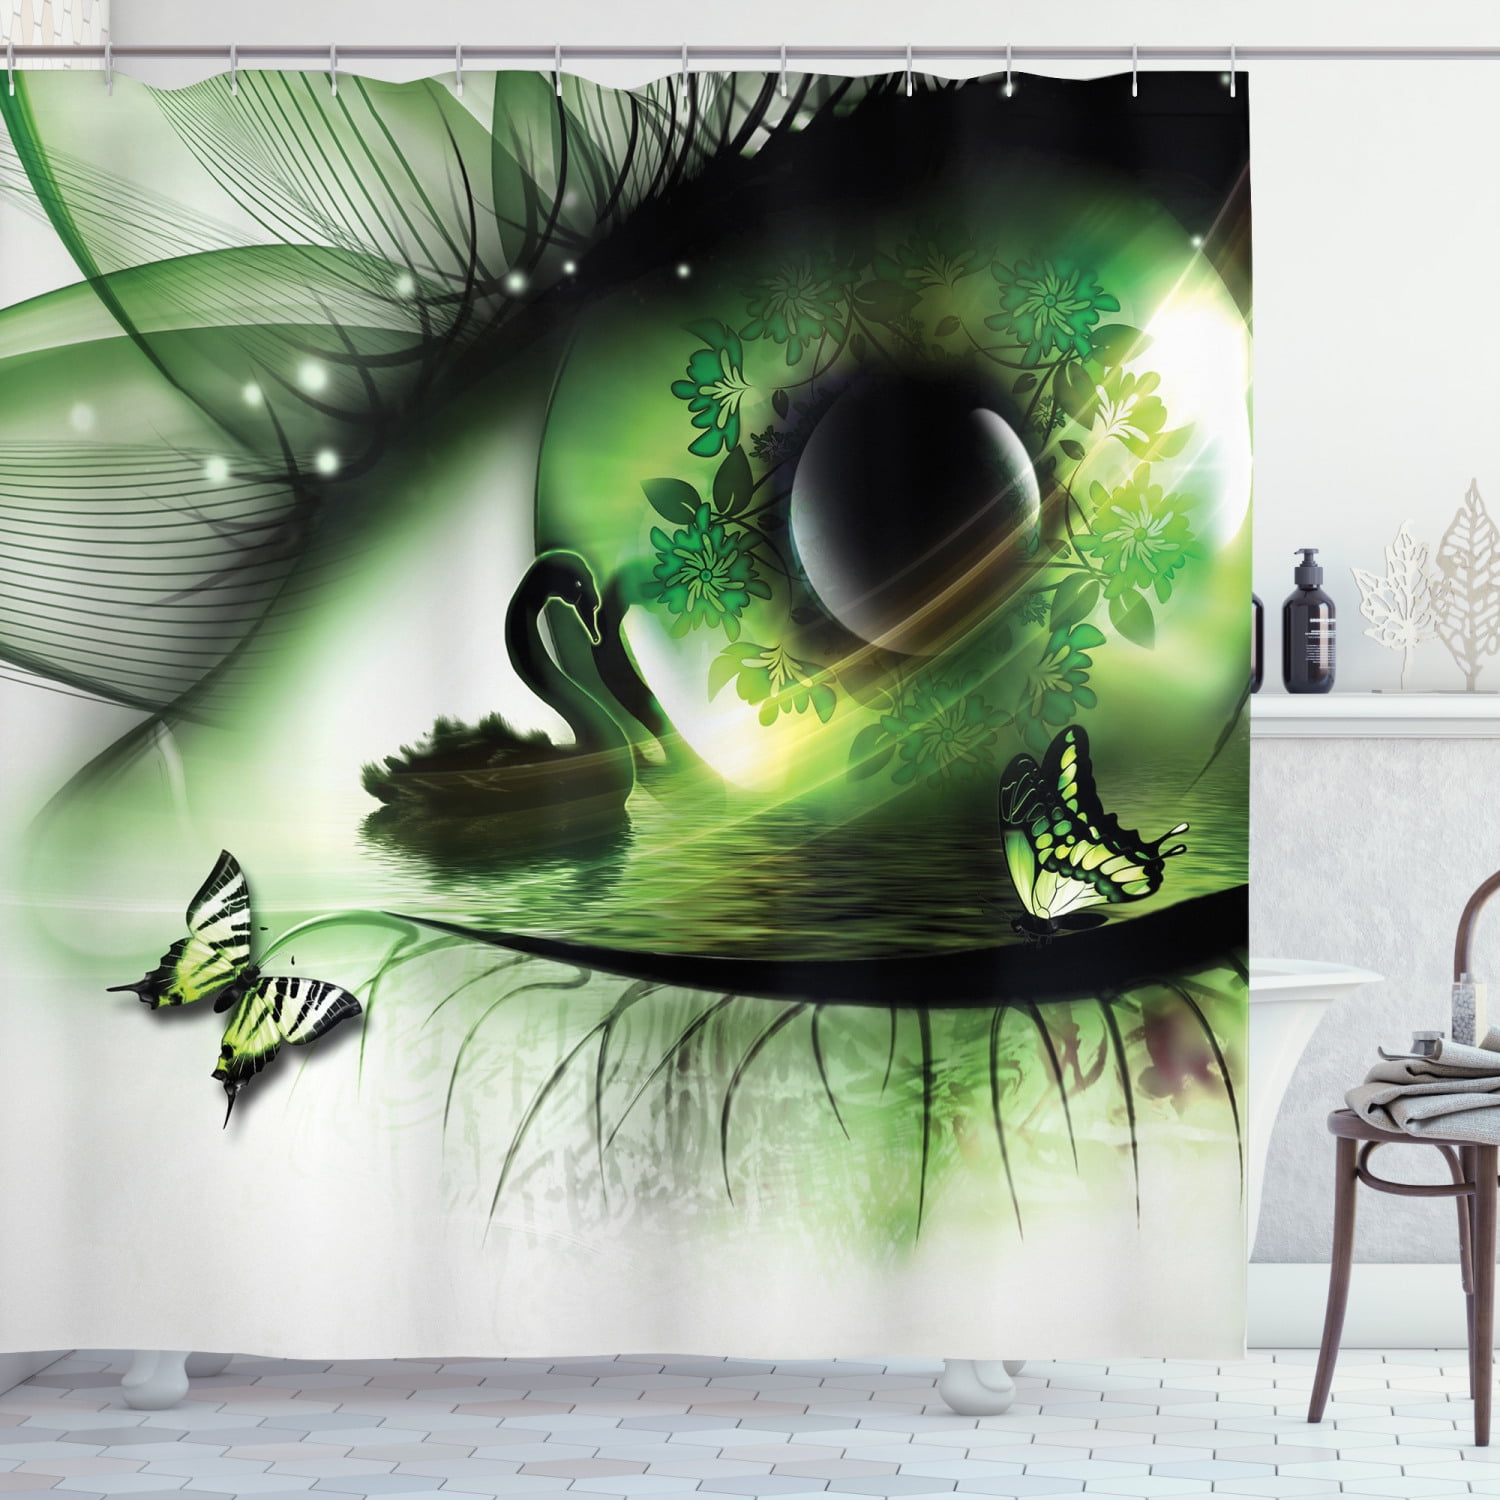 Abstract Artwork with Swan Eye Butterflies Image Modern Decor Shower Curtain Set 